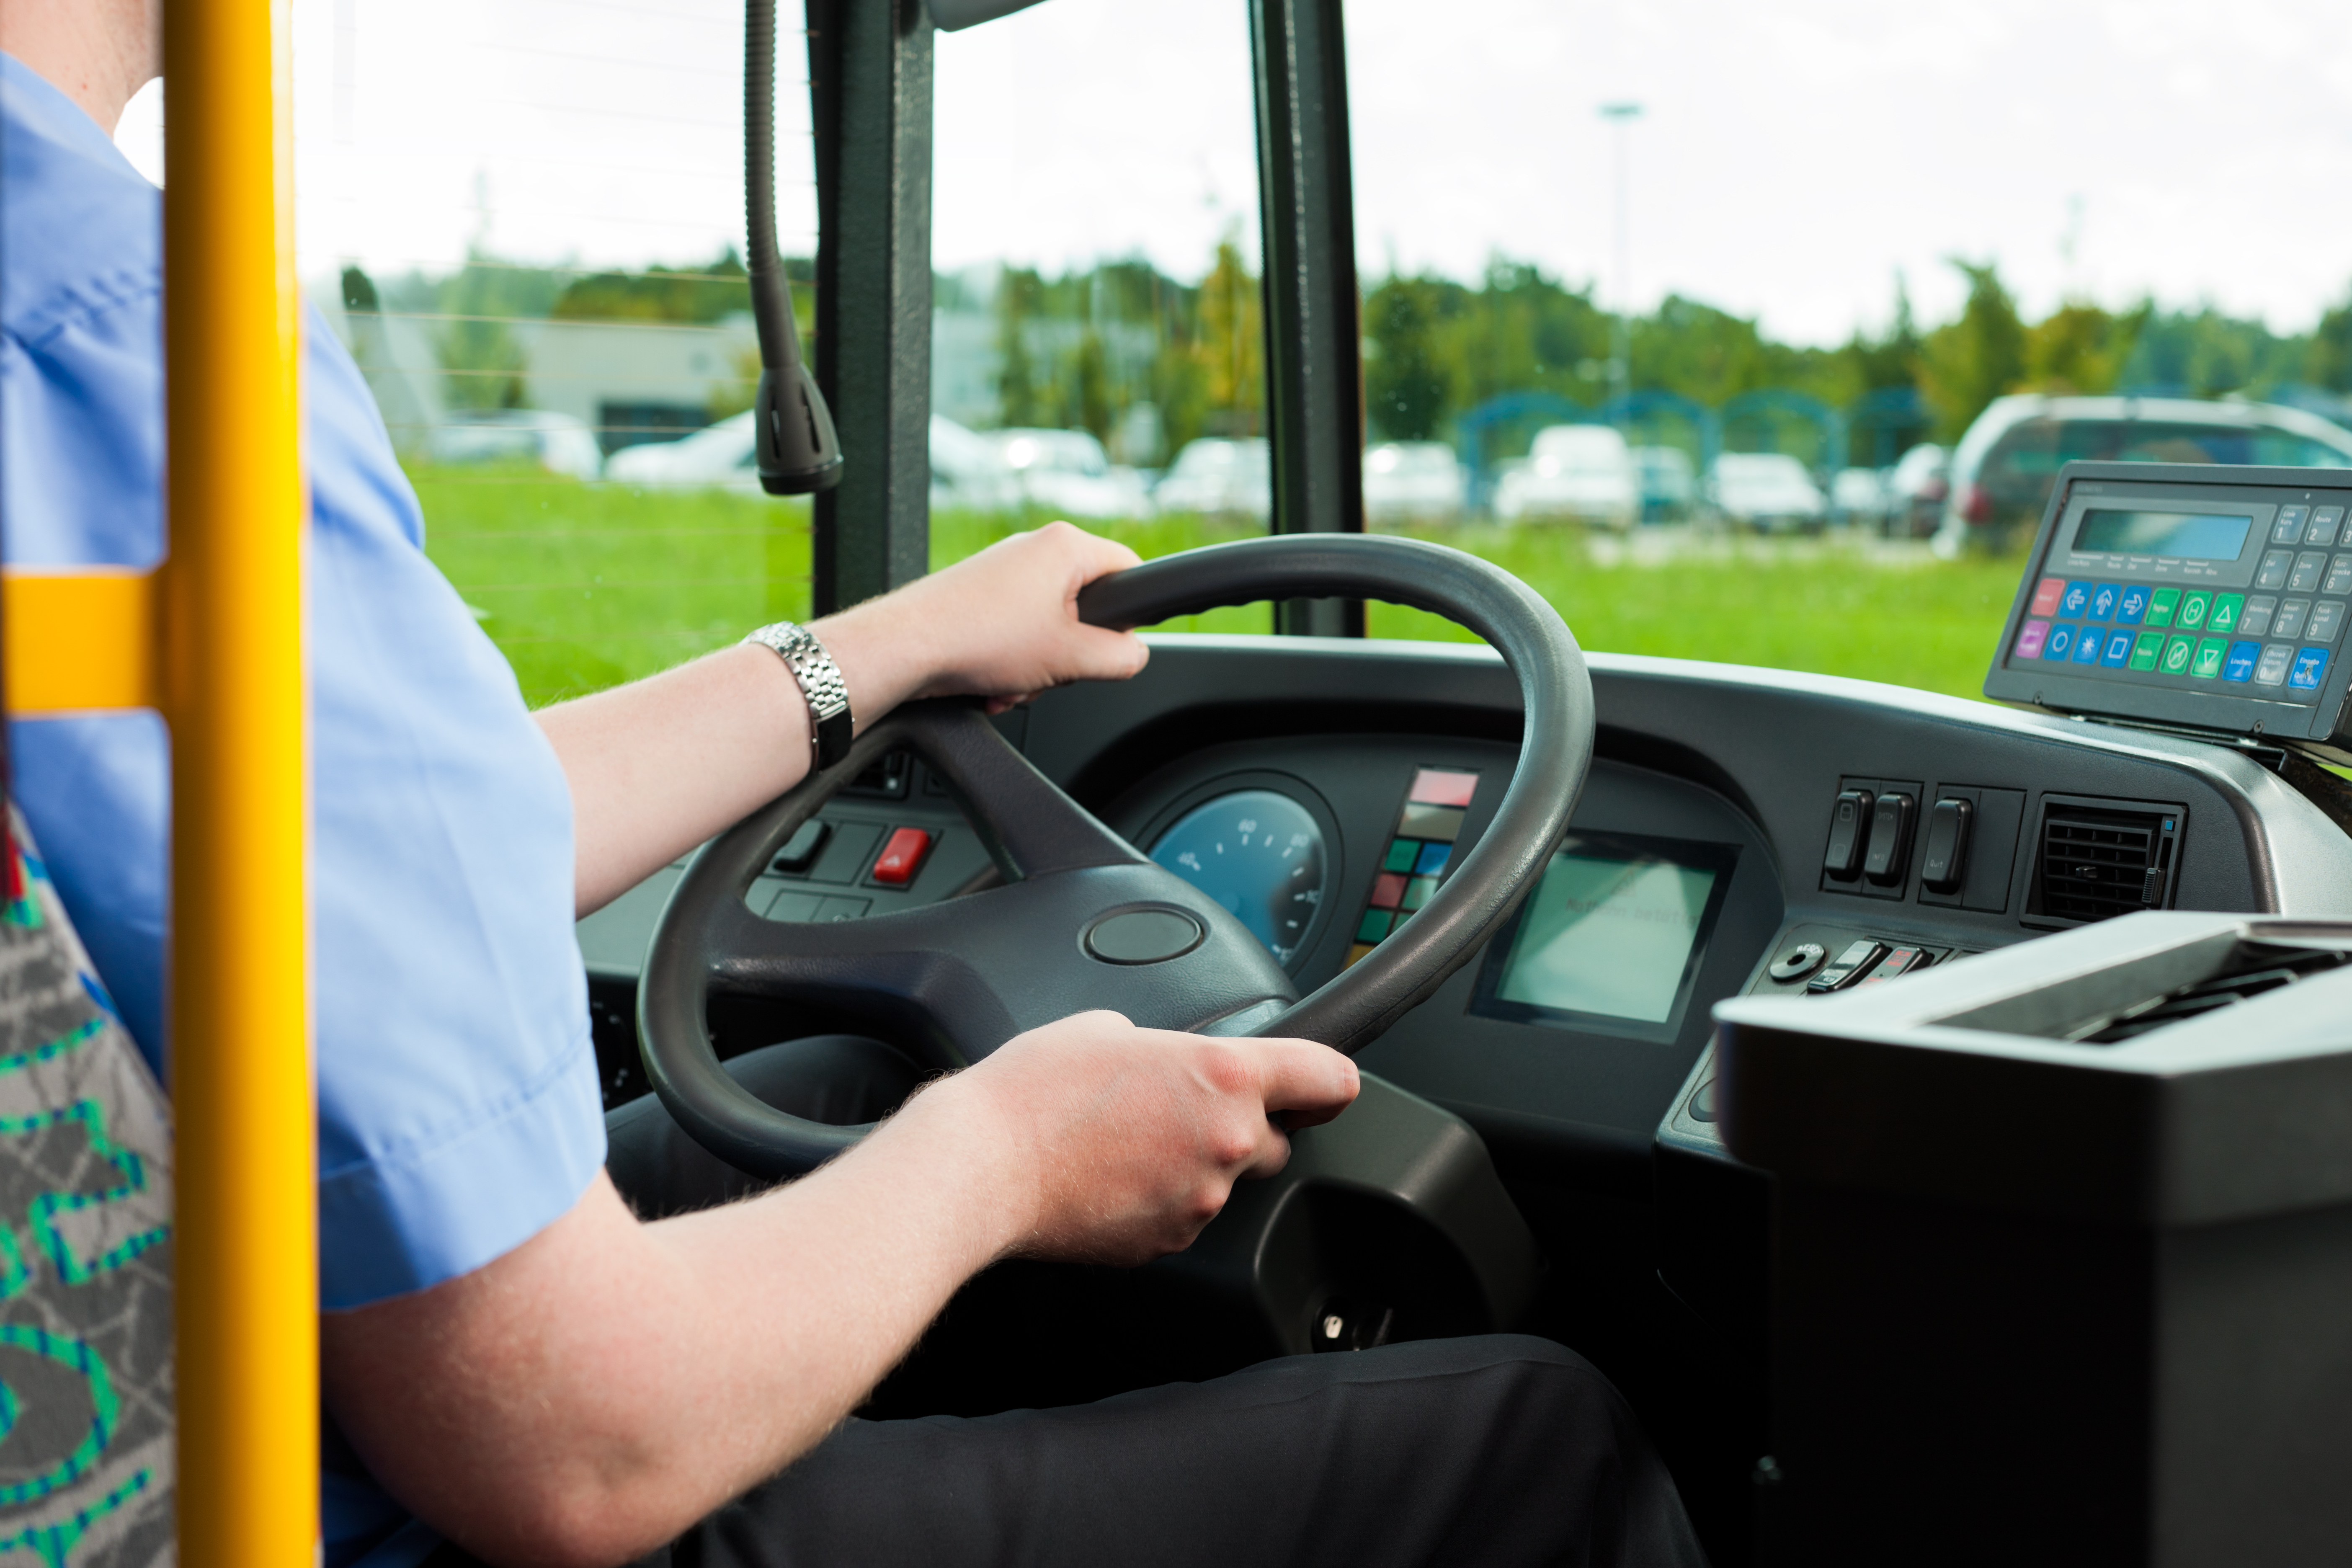 school bus driver shortage in richland wa